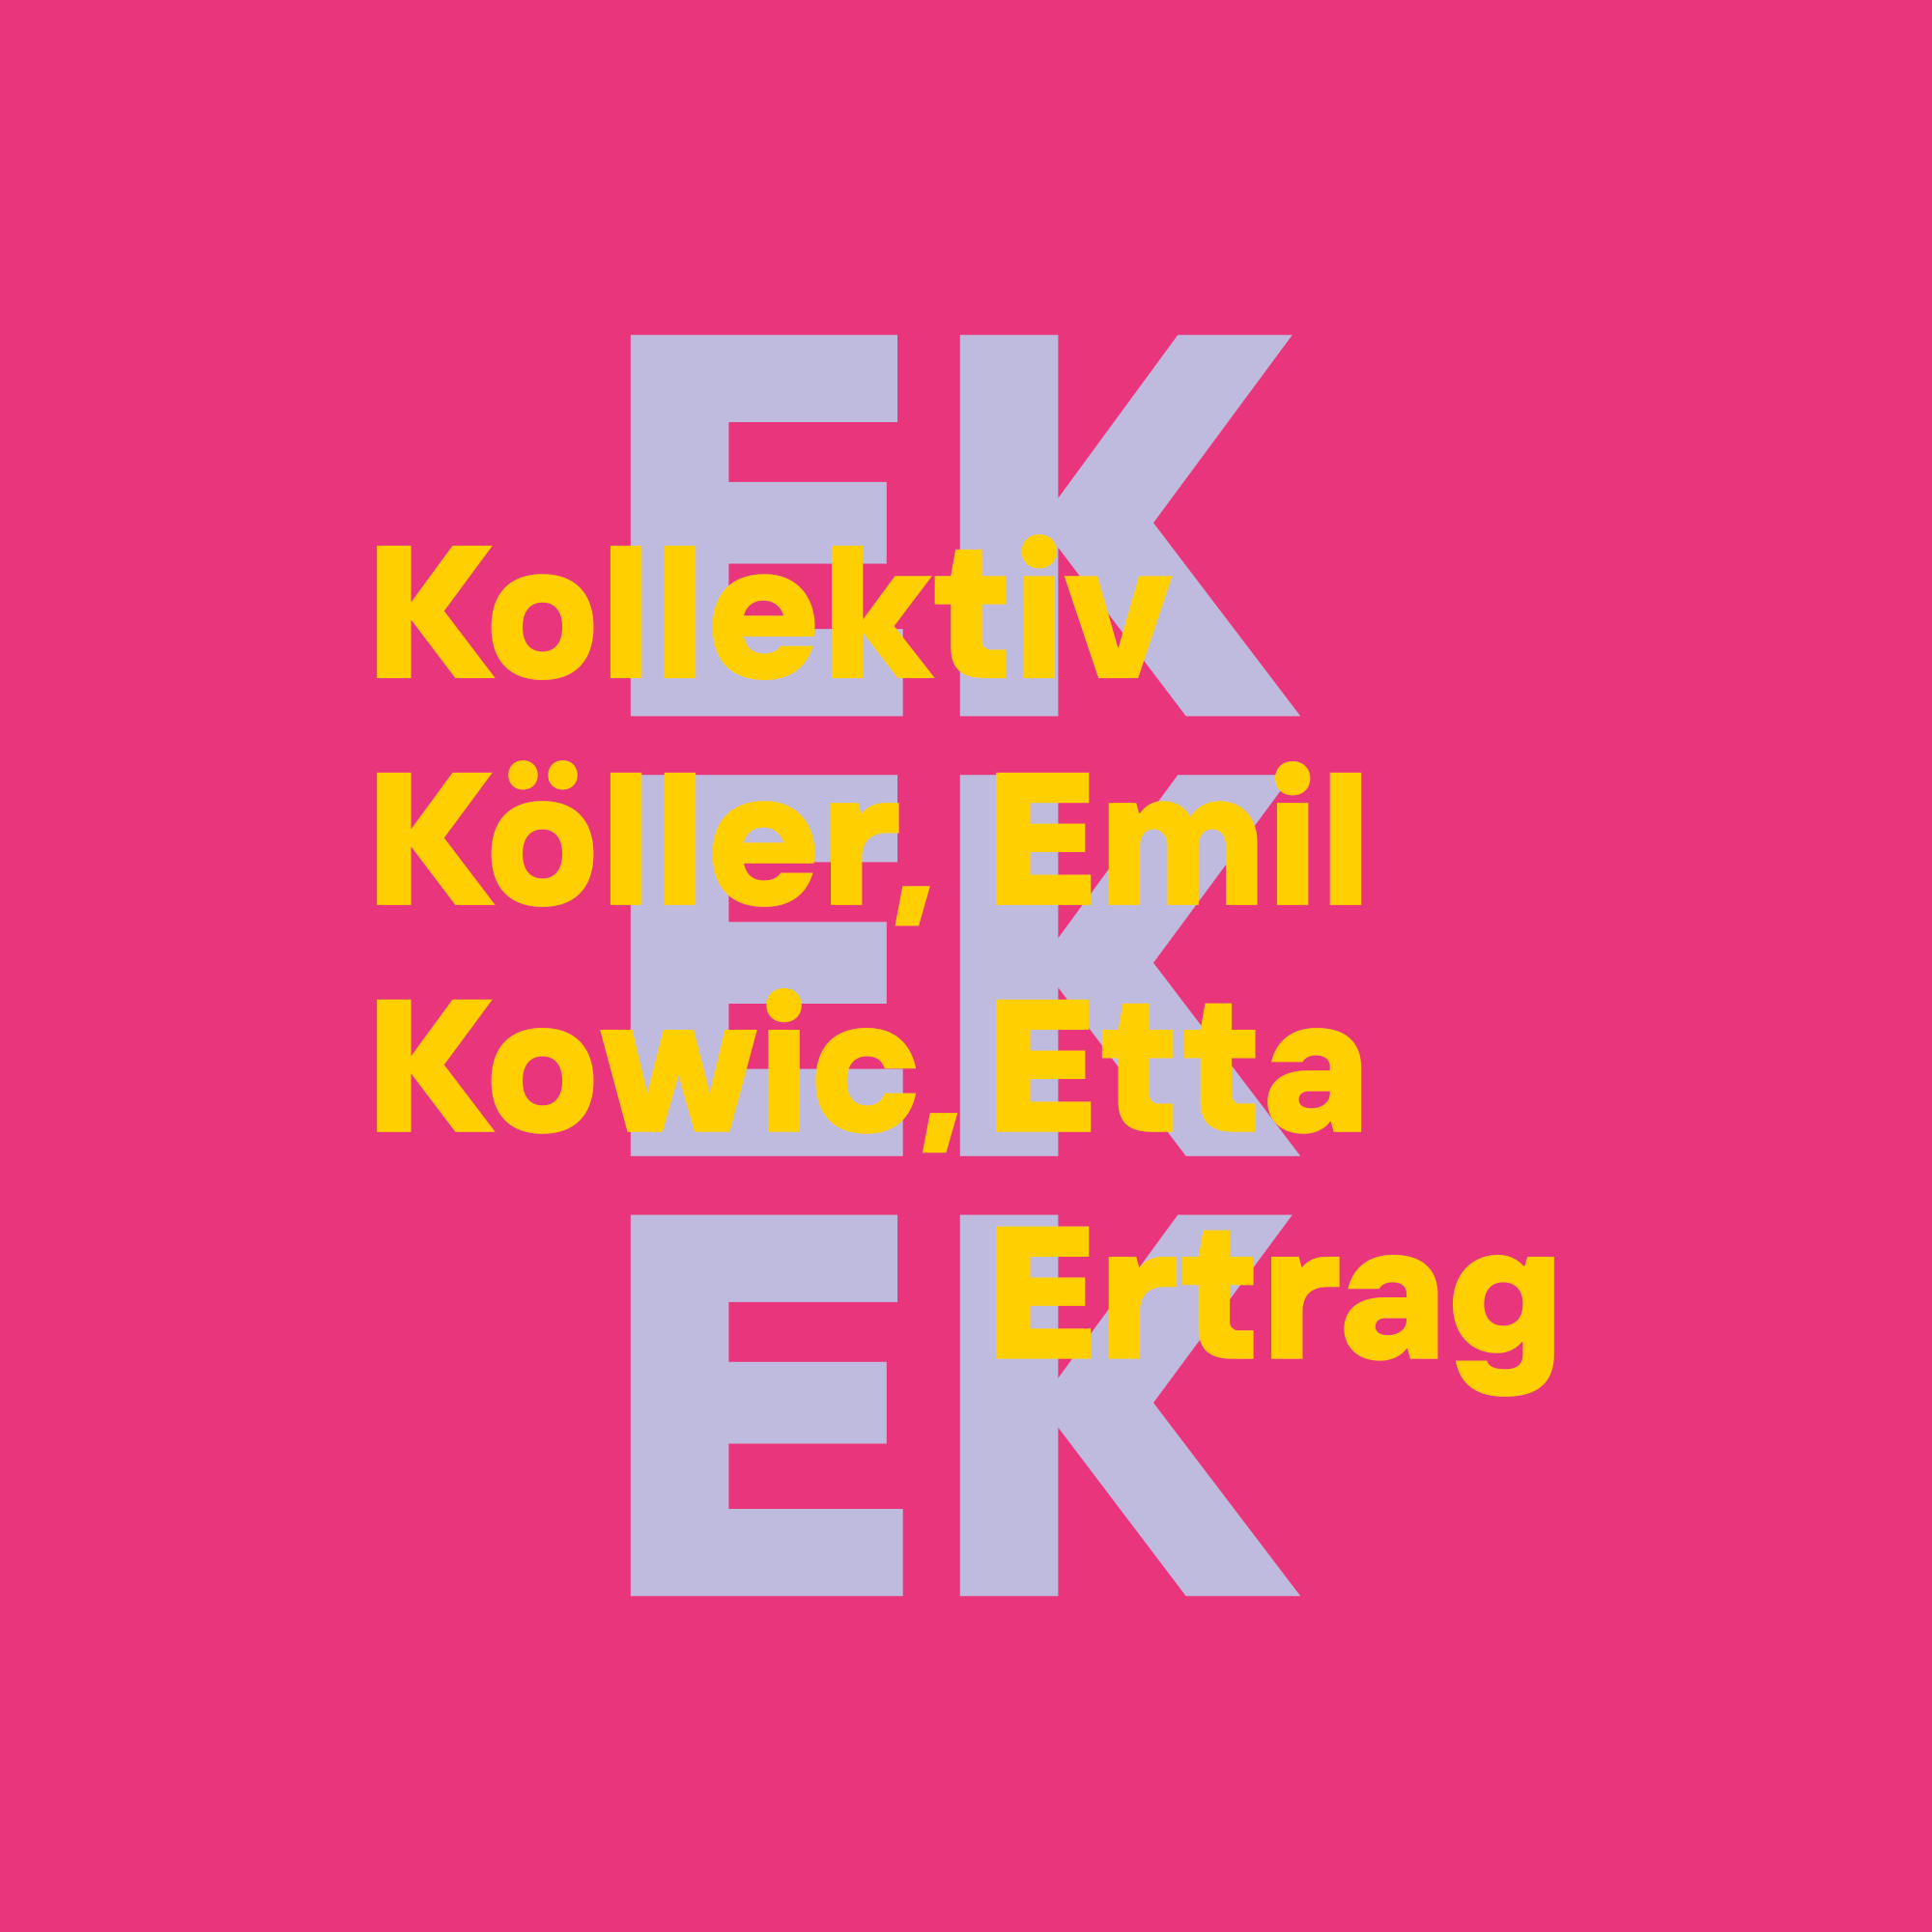 EKEKEK Visual Identity designed by Tobias Heumann